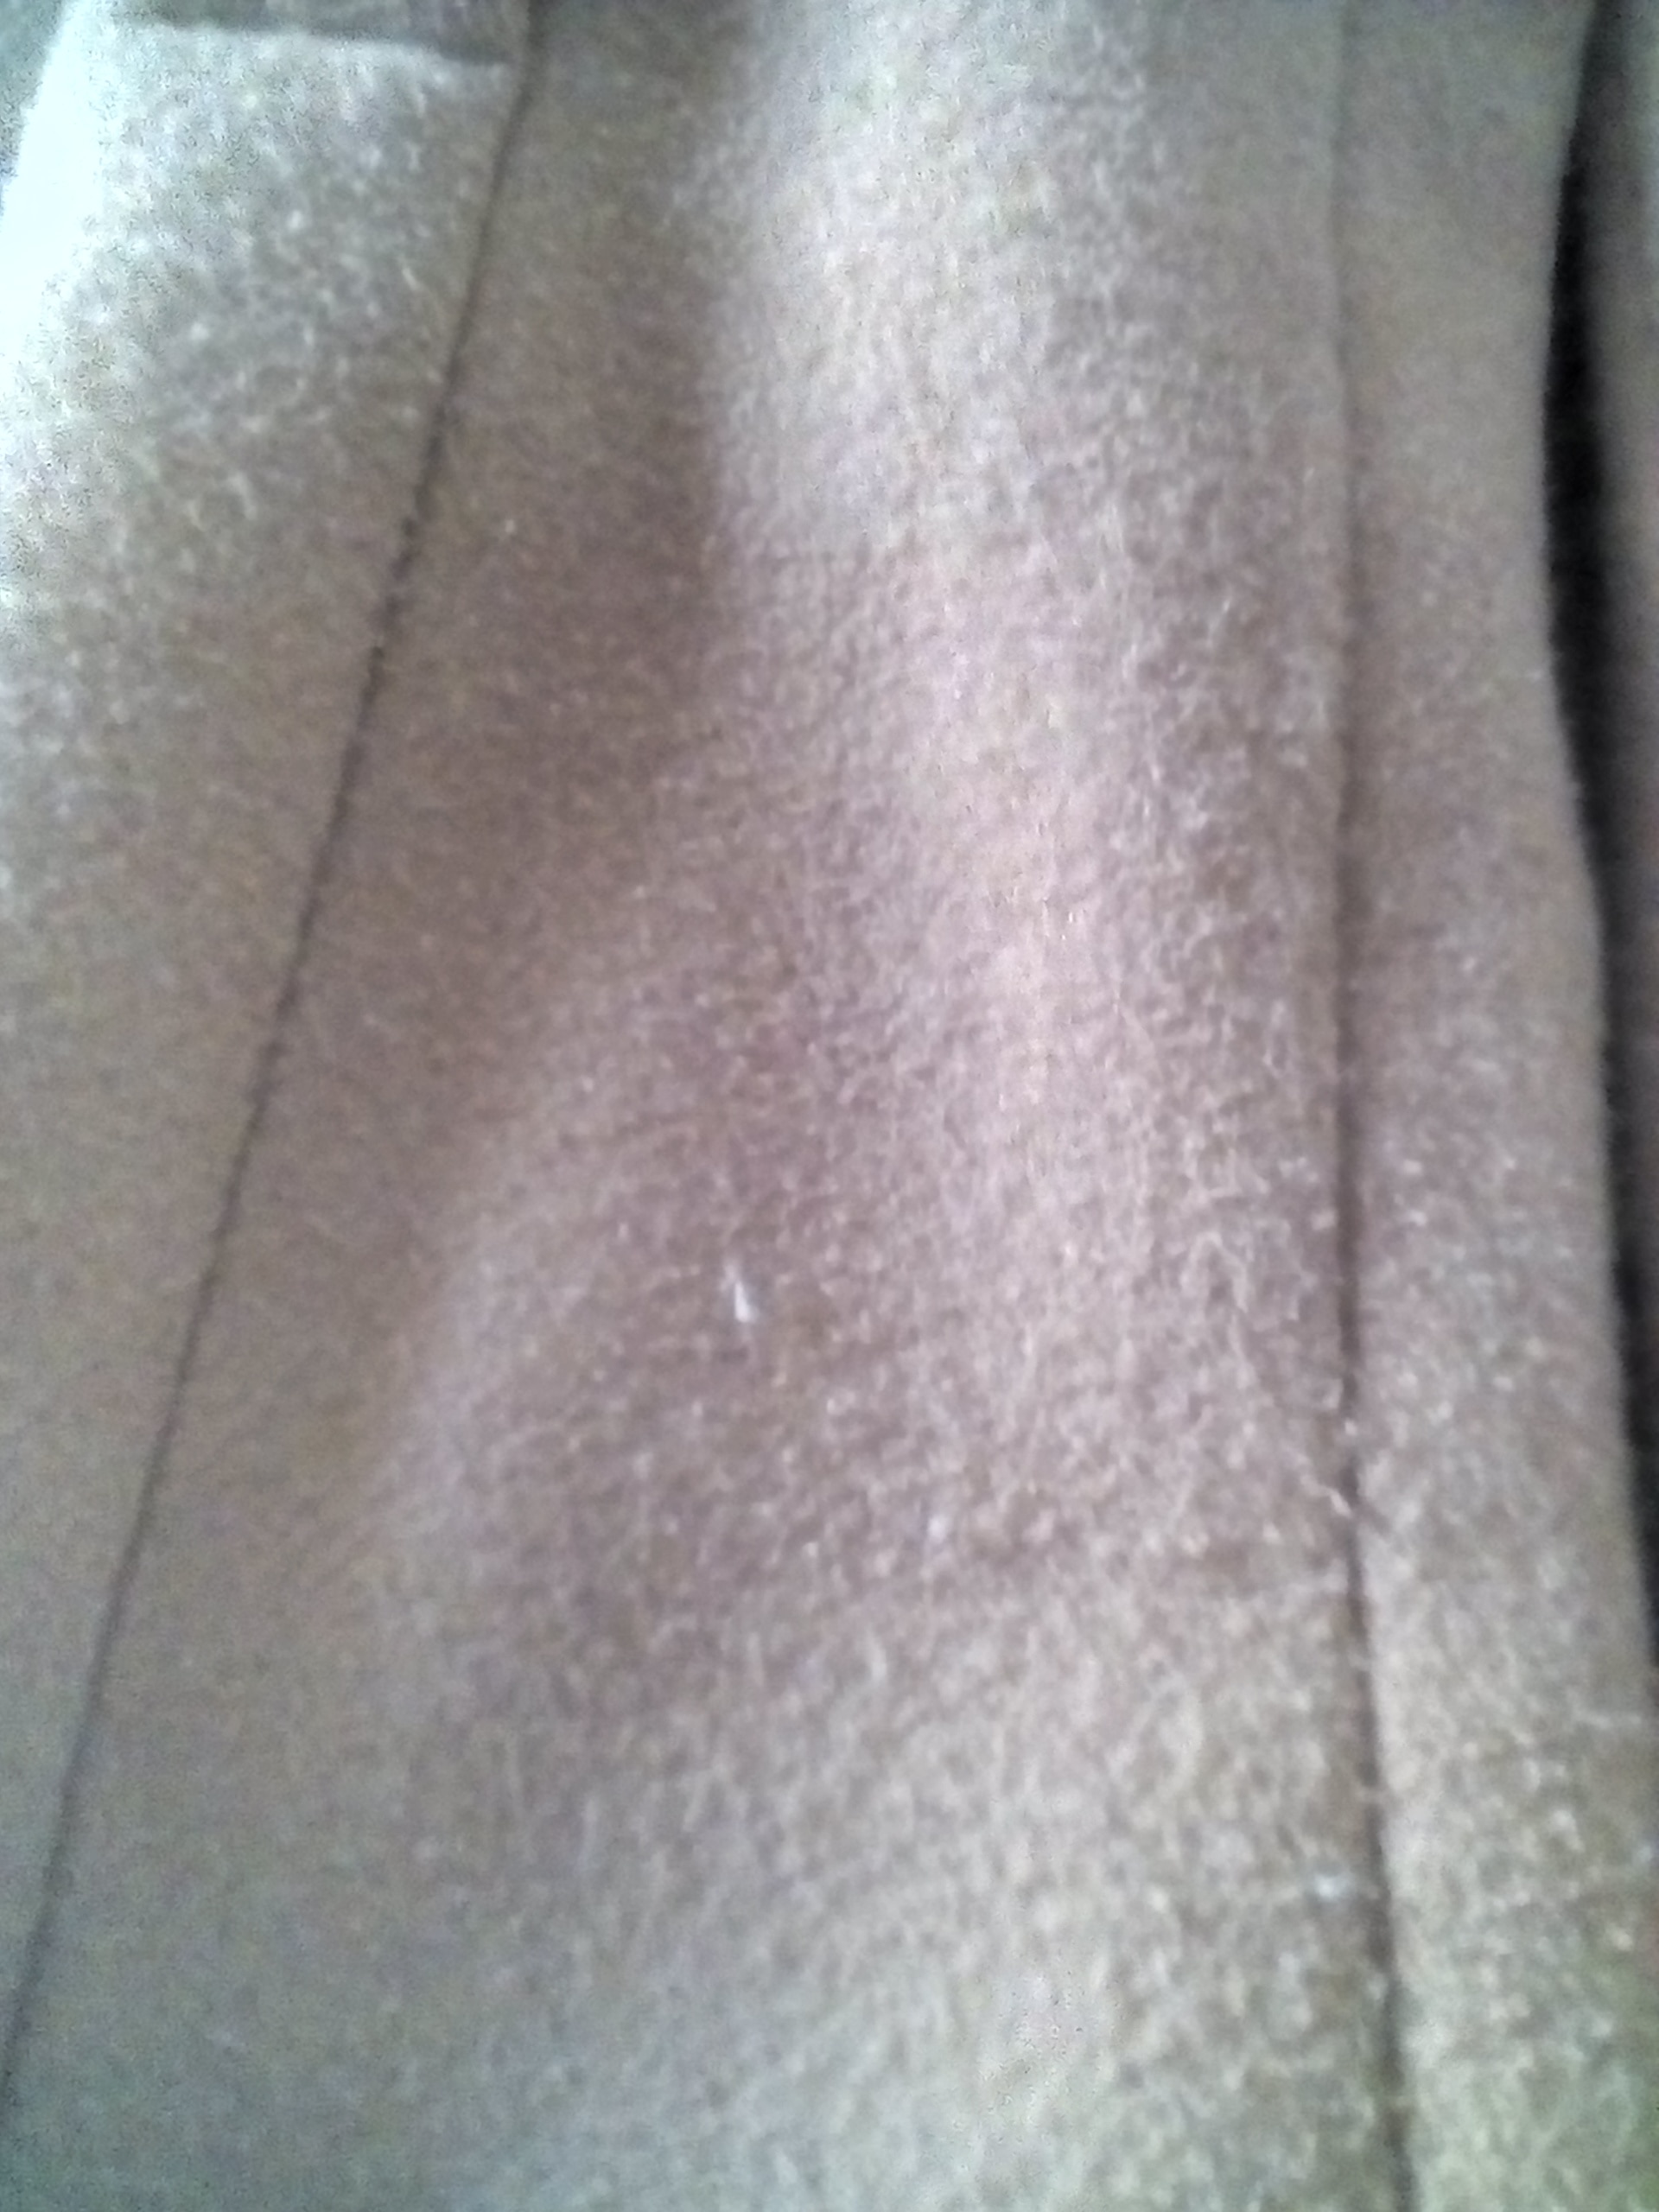 Portable Clothes Lint Remover Fuzz Fabric Shaver - Funiyou